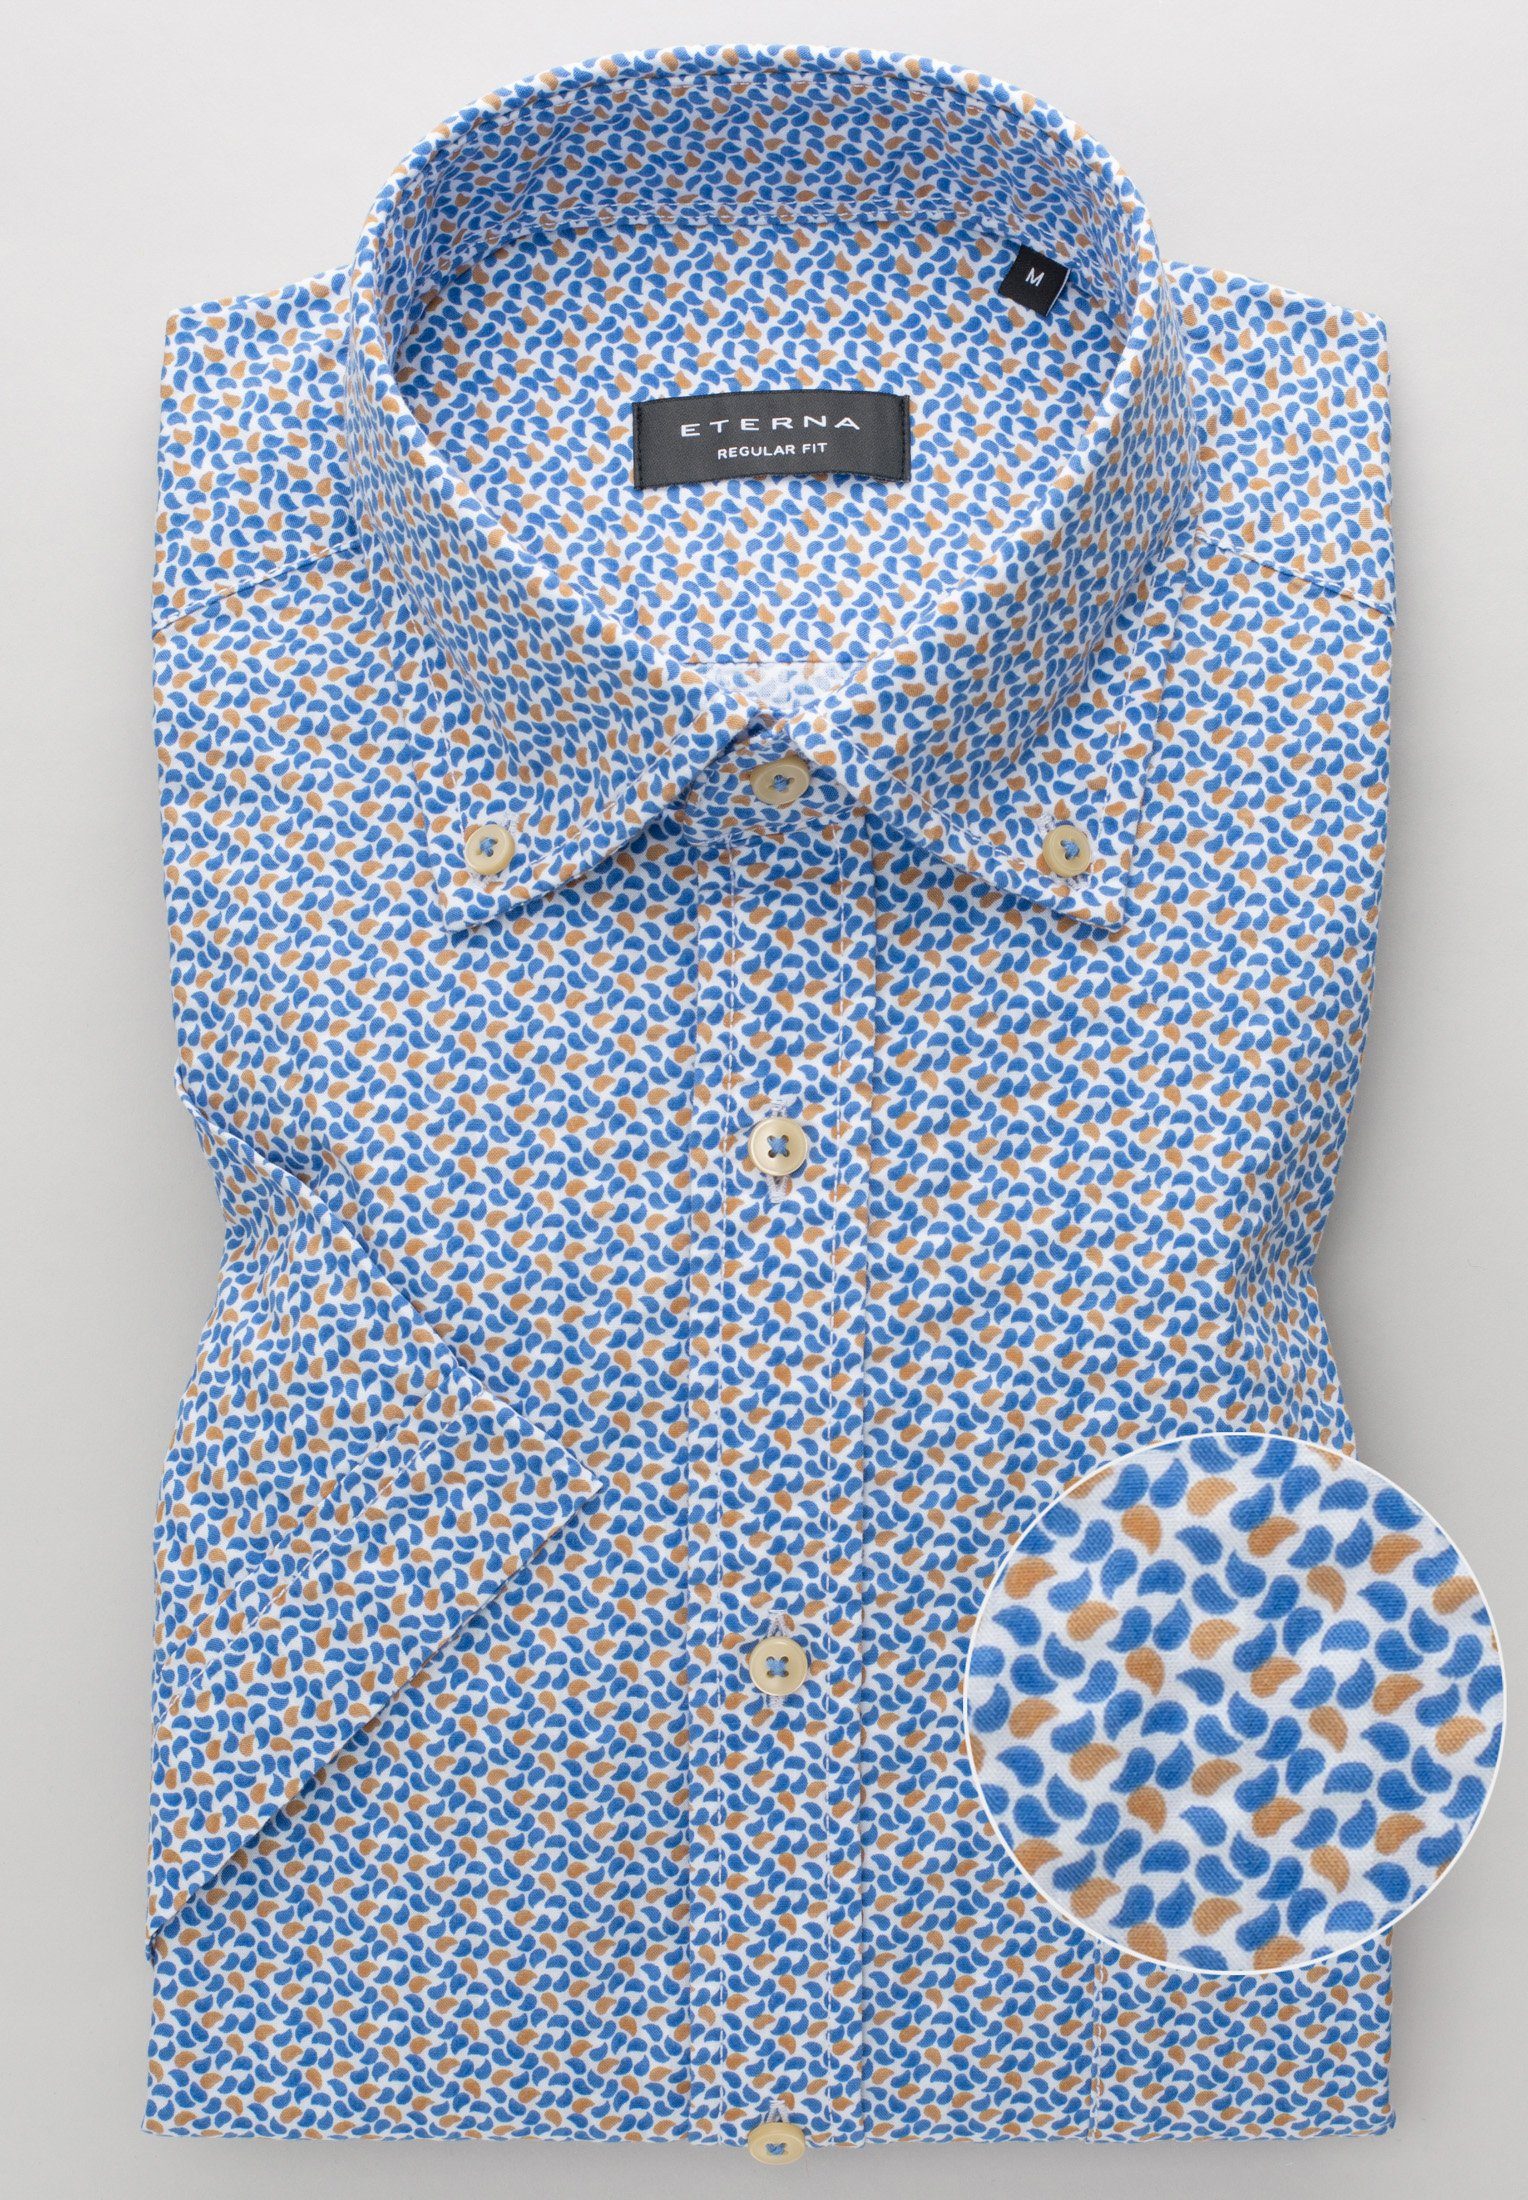 punkte 2481-14-WS8B Kurzarm Bluse seersucker Hemd FIT REGULAR blau Eterna Klassische ETERNA